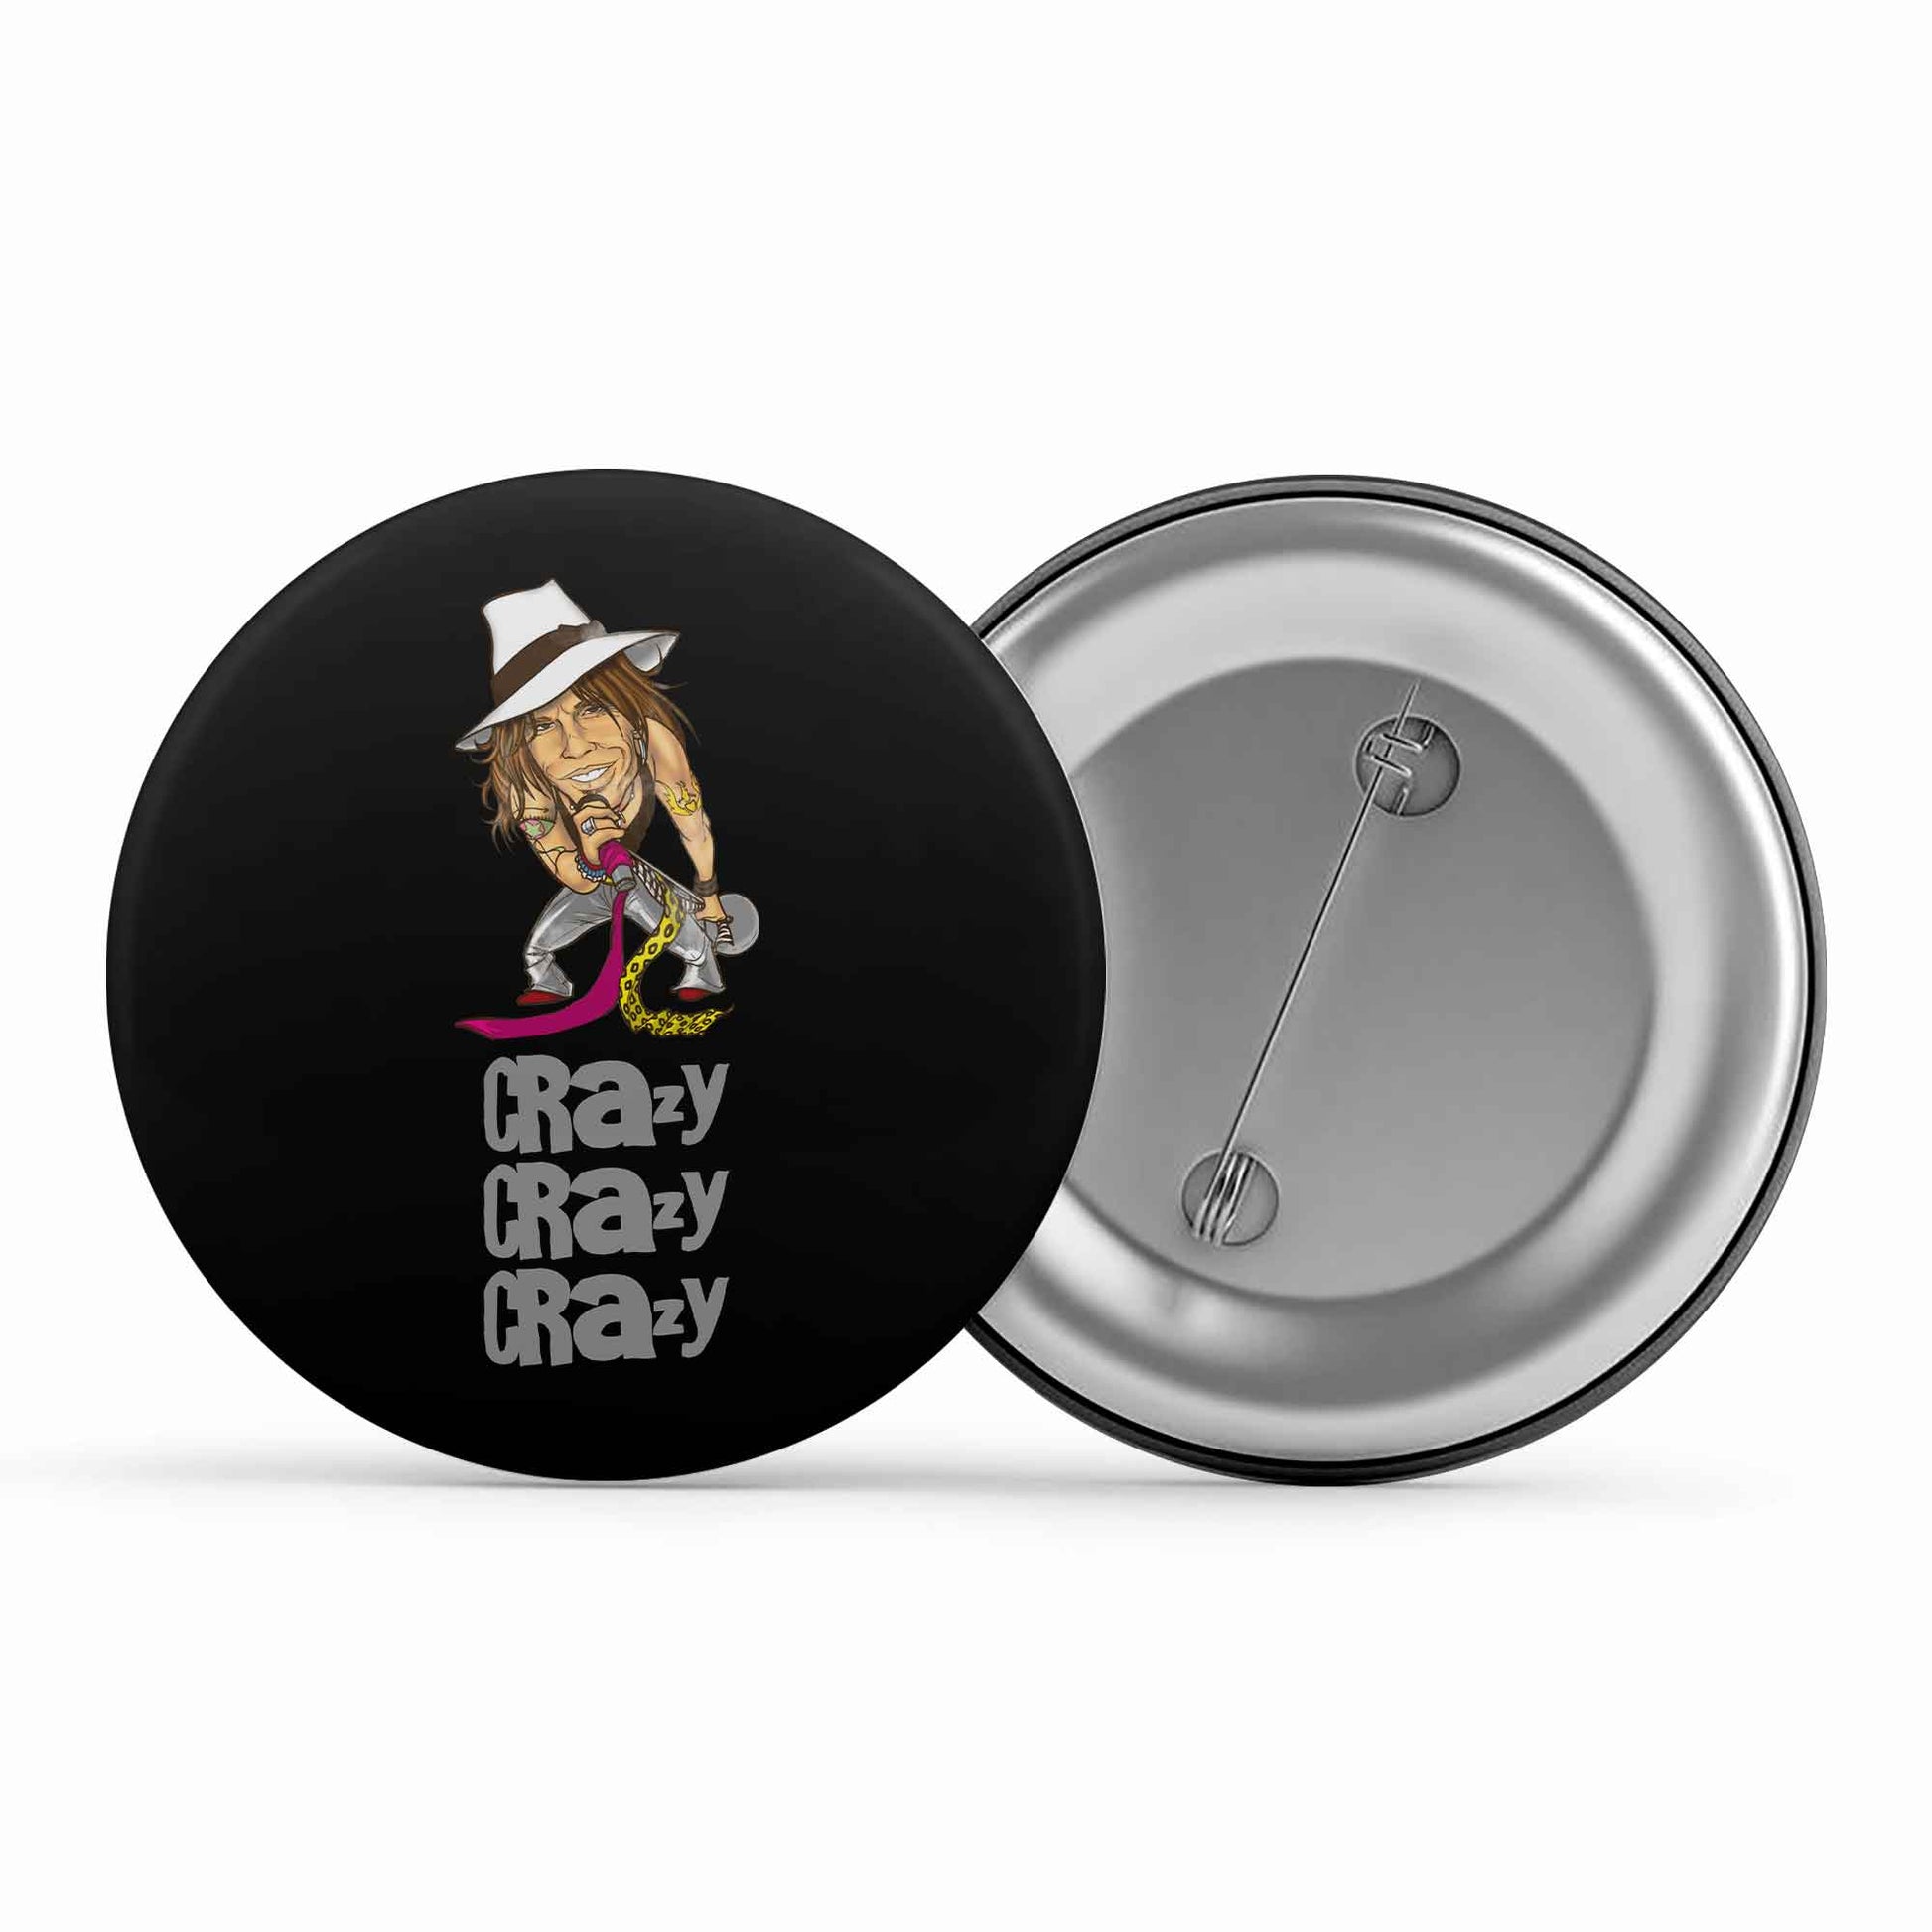 aerosmith crazy badge pin button music band buy online india the banyan tee tbt men women girls boys unisex